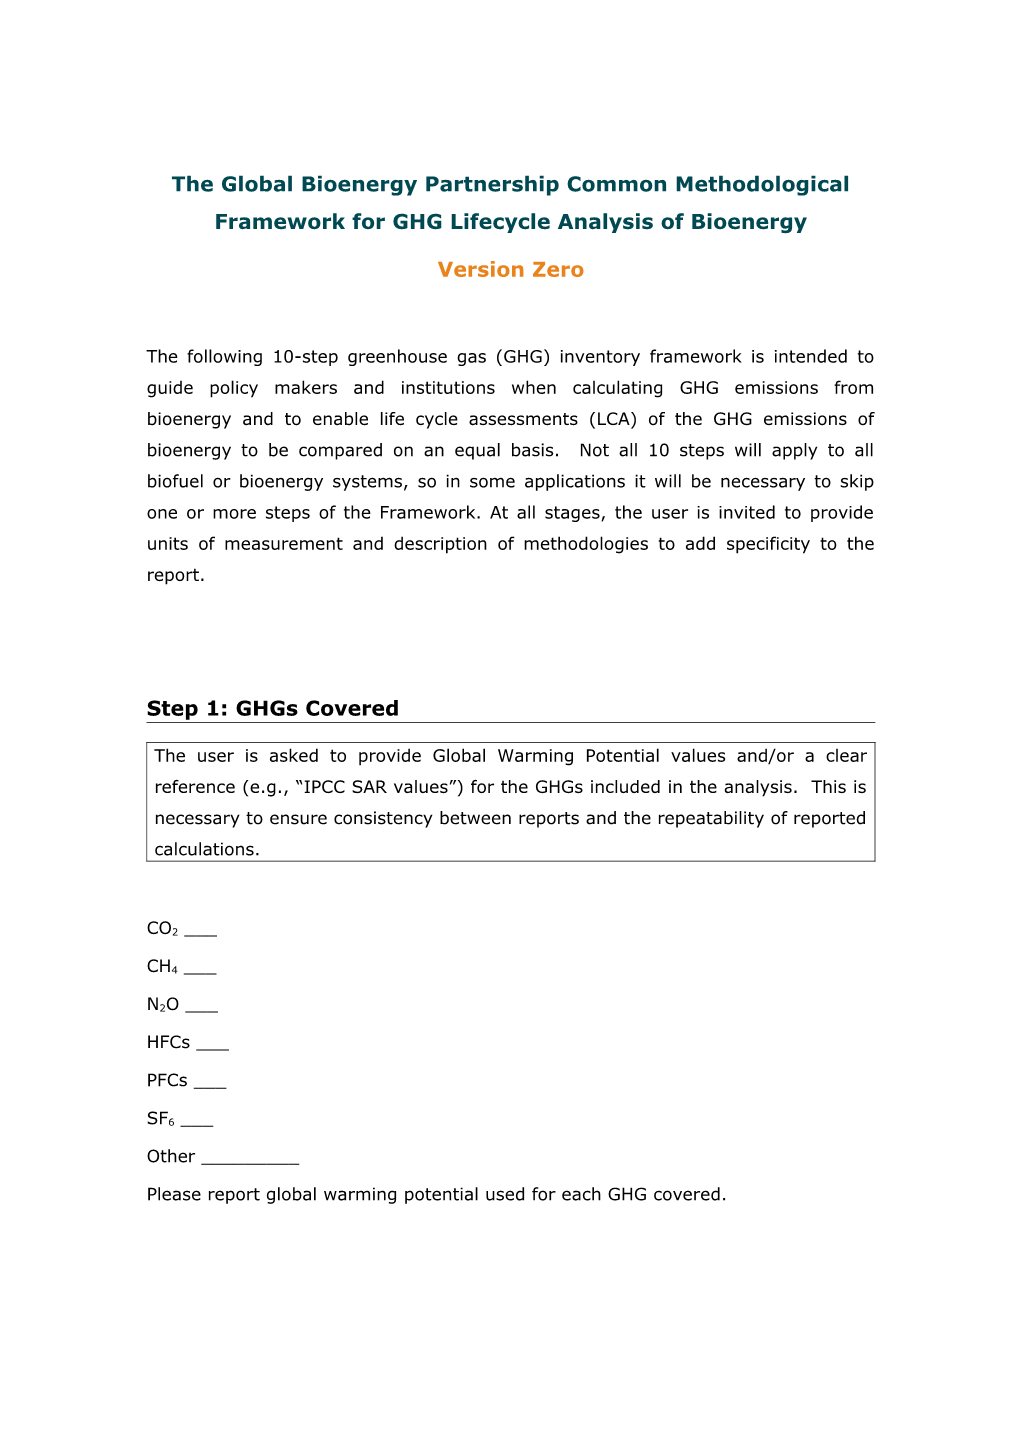 The Global Bioenergy Partnership Common Methodological Framework for GHG Lifecycle Analysis